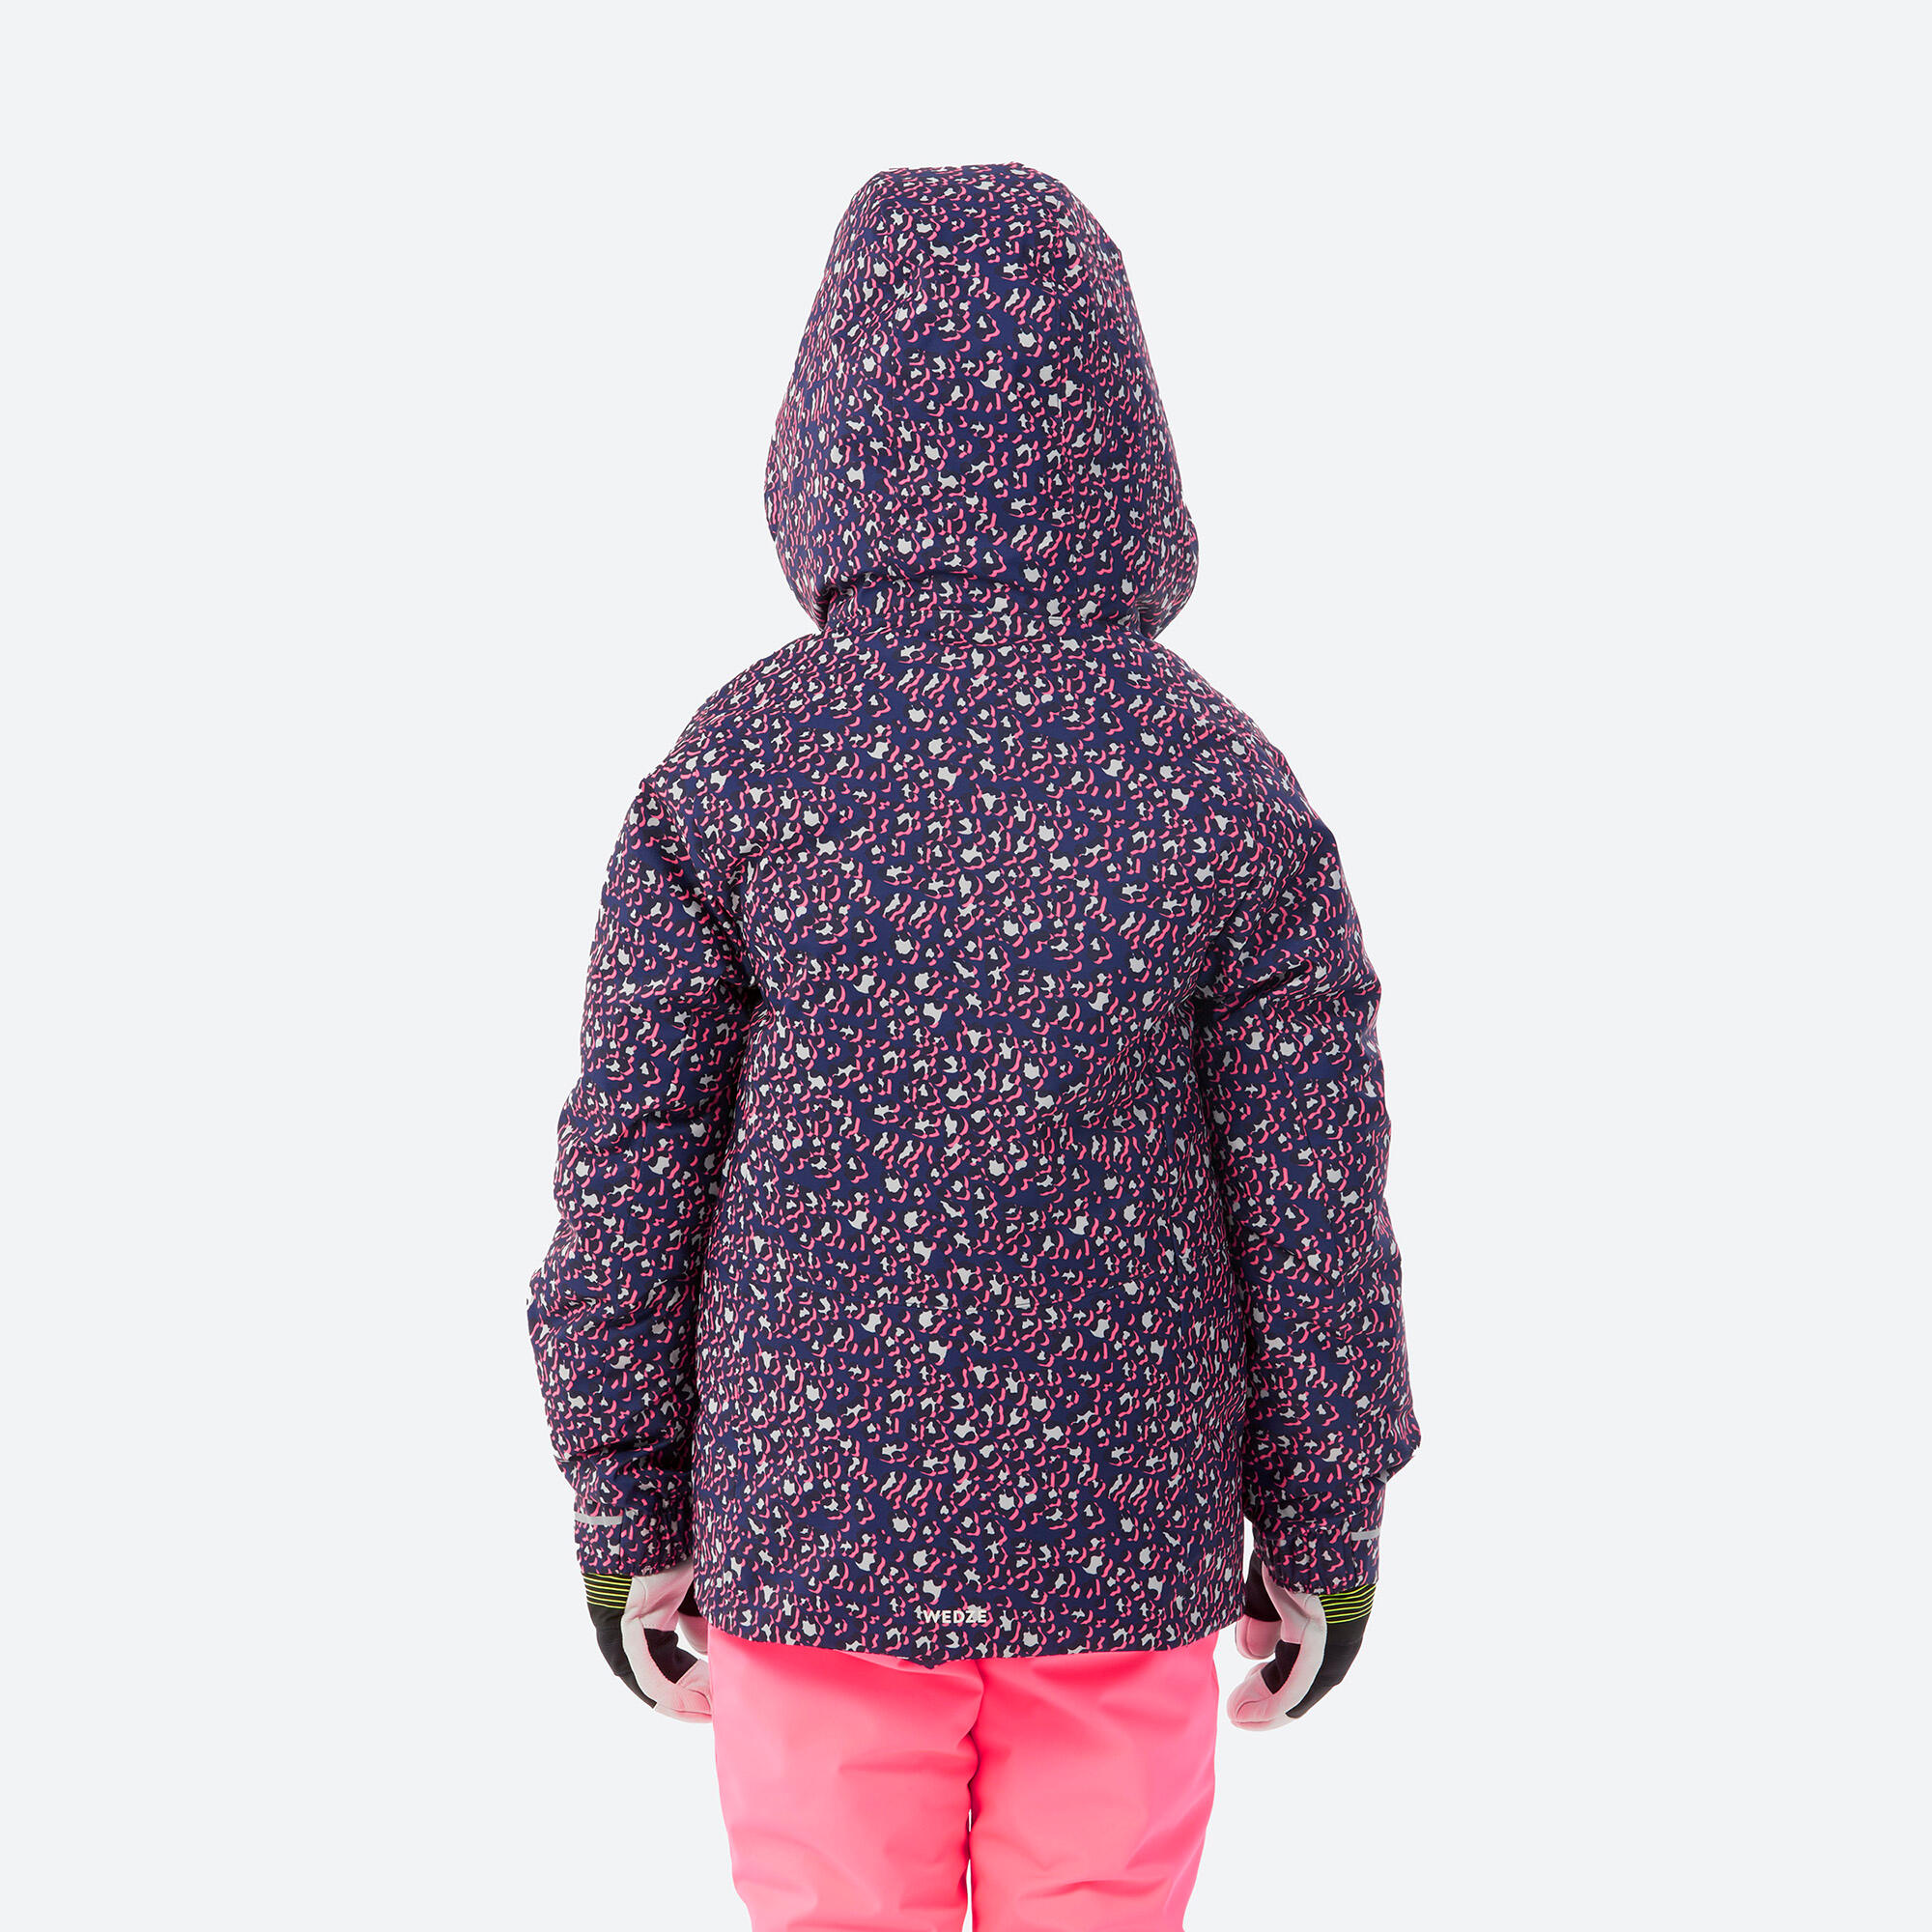 Kids’ Warm and Waterproof Ski Jacket 500 - Leopard Print 5/10